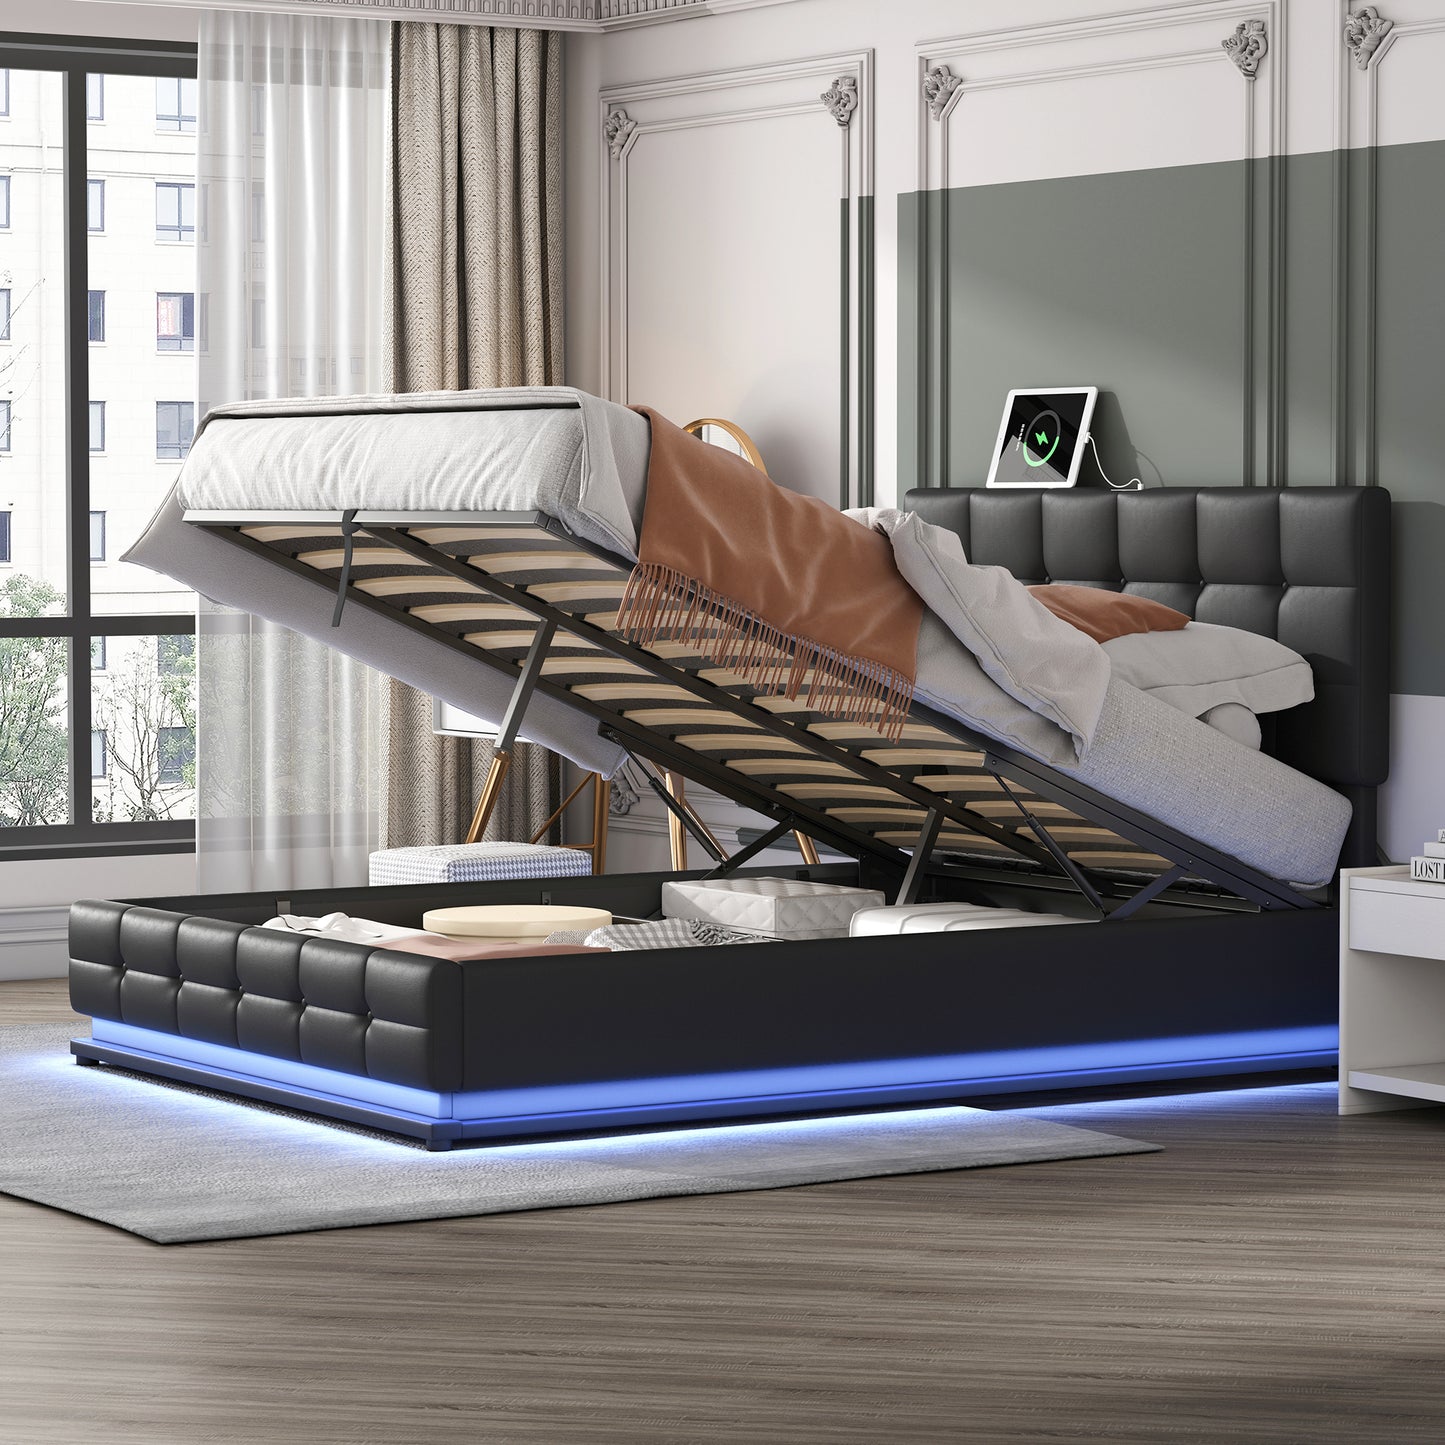 Mabin Modern Hydraulic Lift Platform Bed with LED Lights - Black